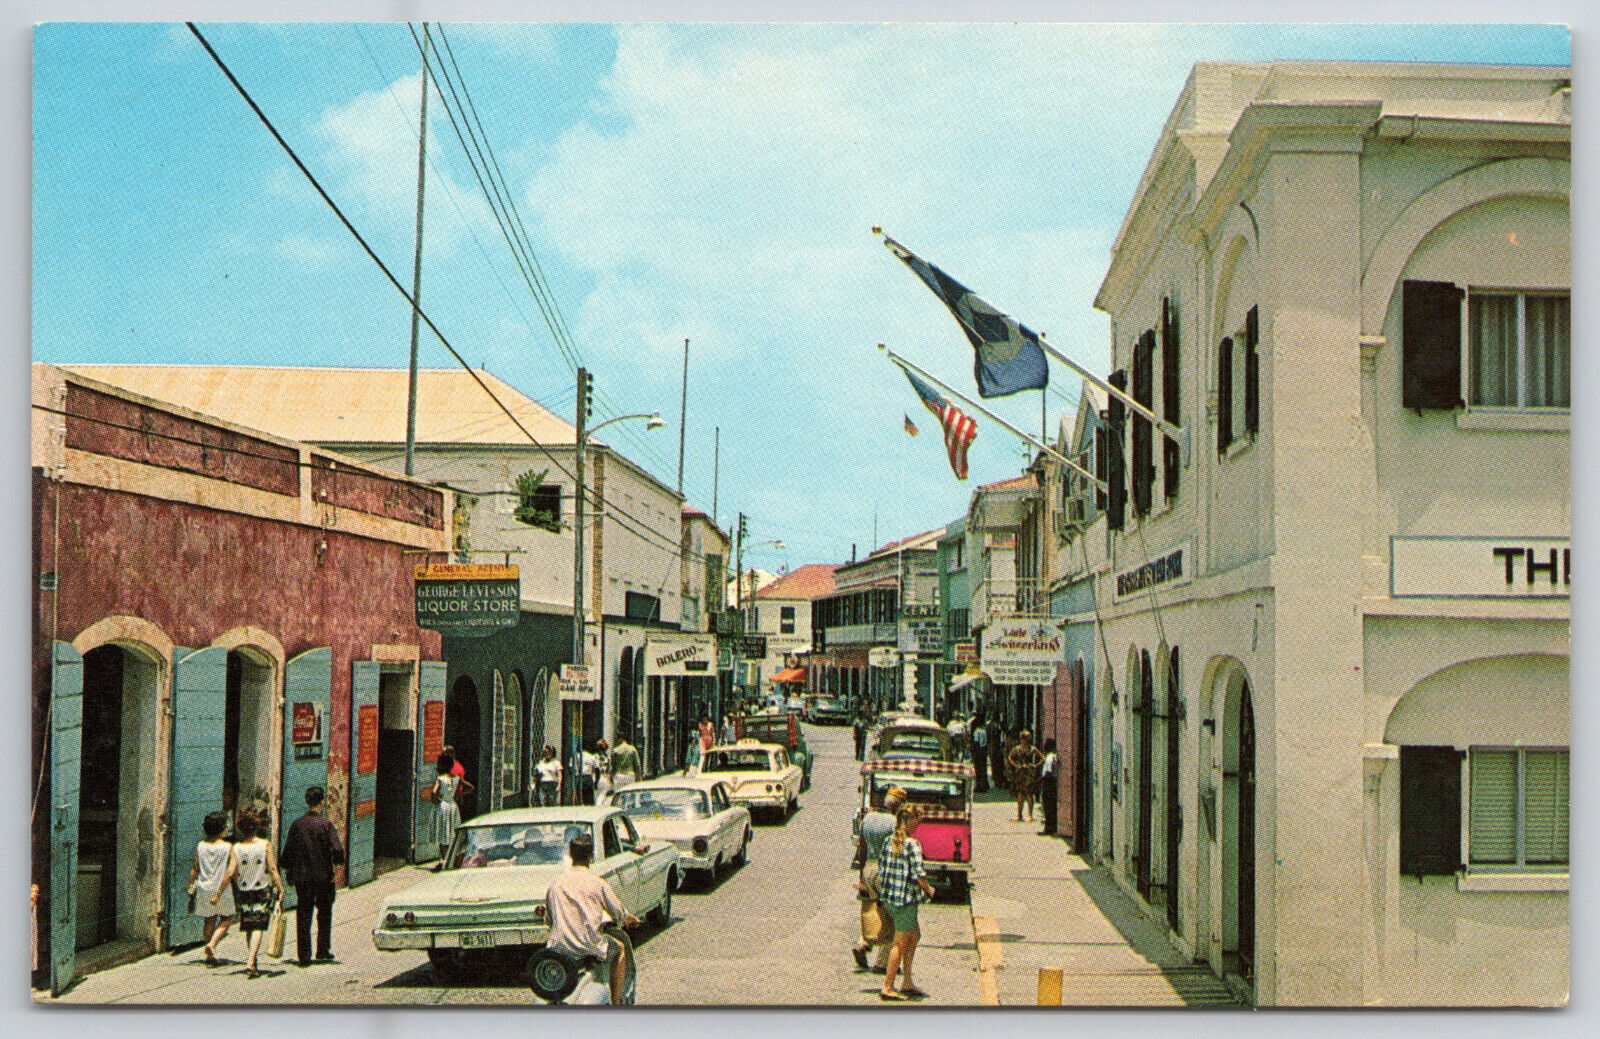 St Thomas Virgin Islands Main Street View Classic Cars Flags Signs Postcard